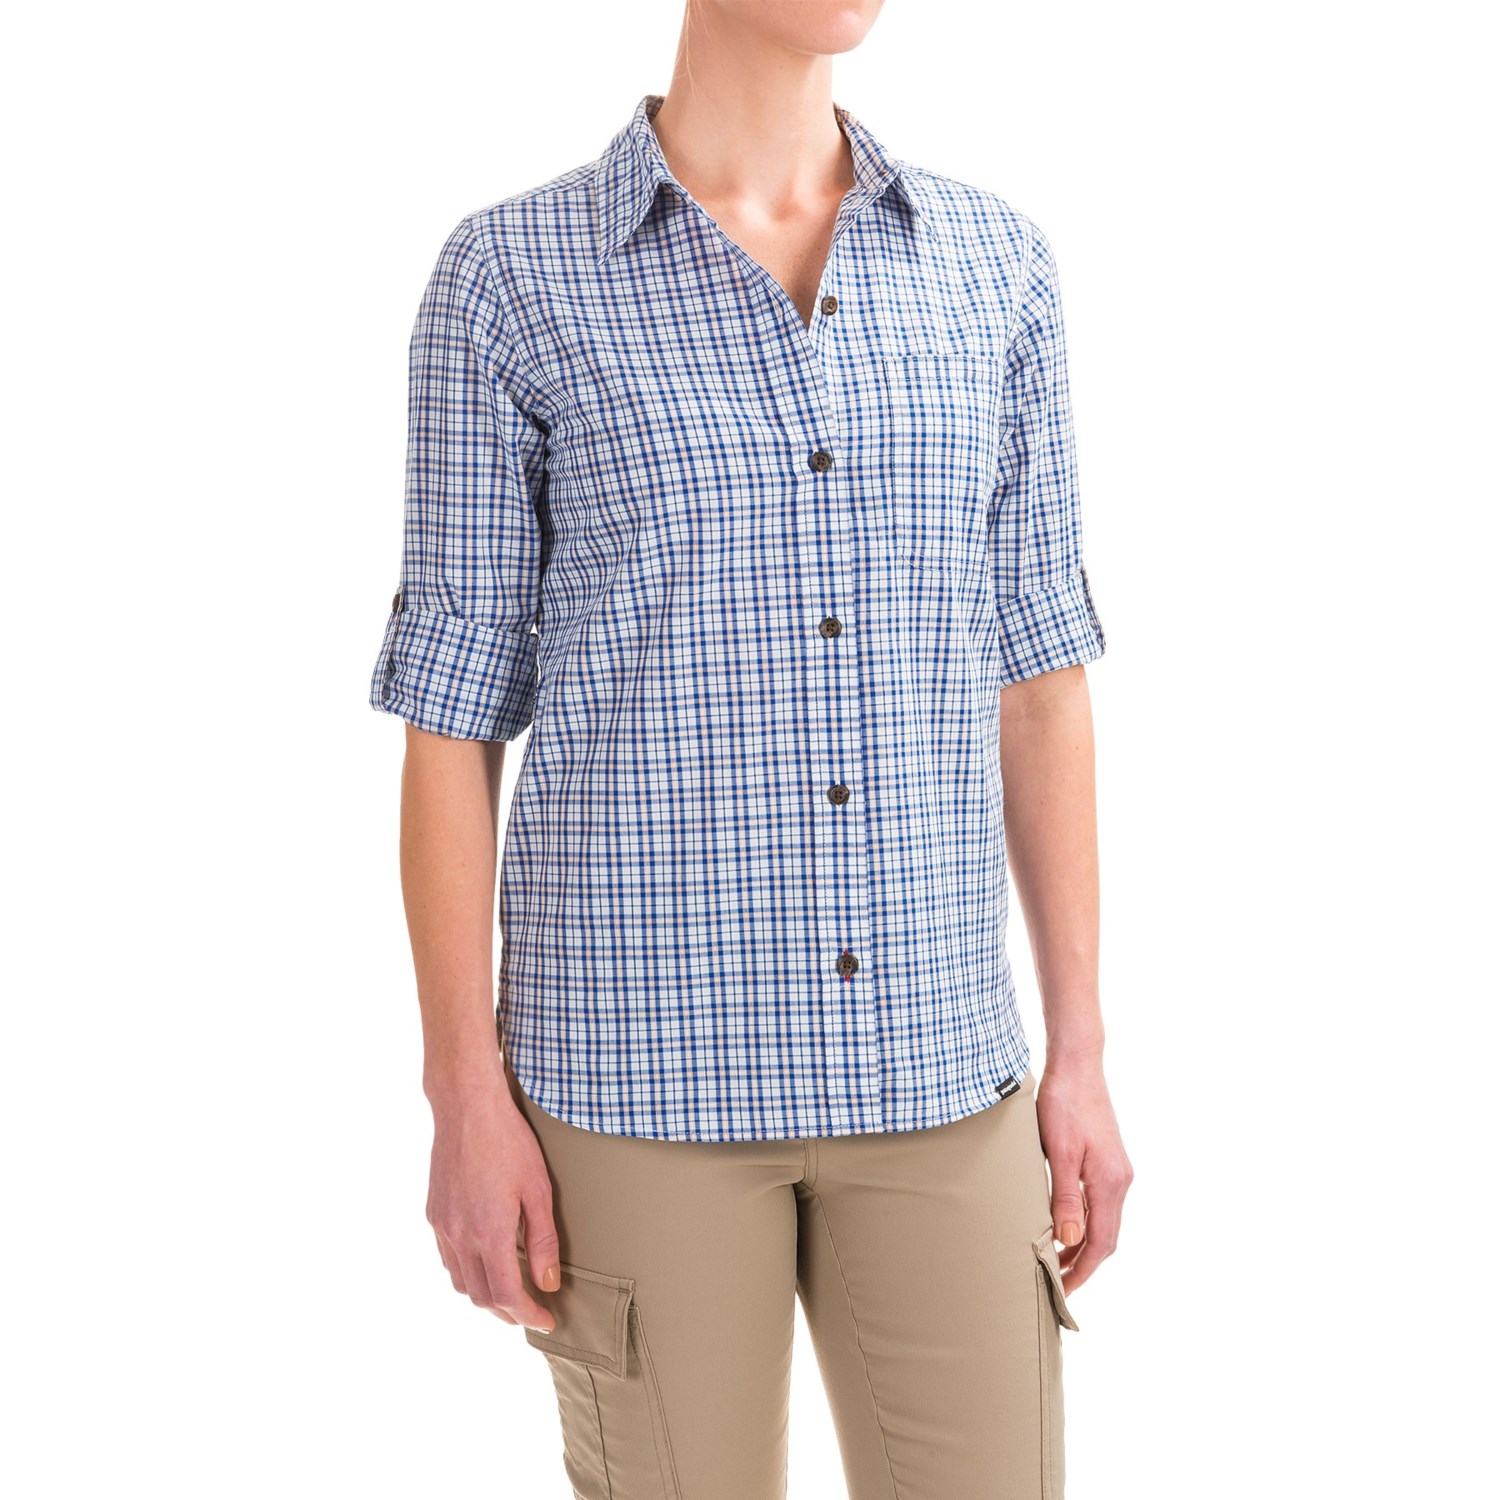 Patagonia Island Hopper II Shirt – UPF 15+, Organic Cotton, Long Sleeve ...